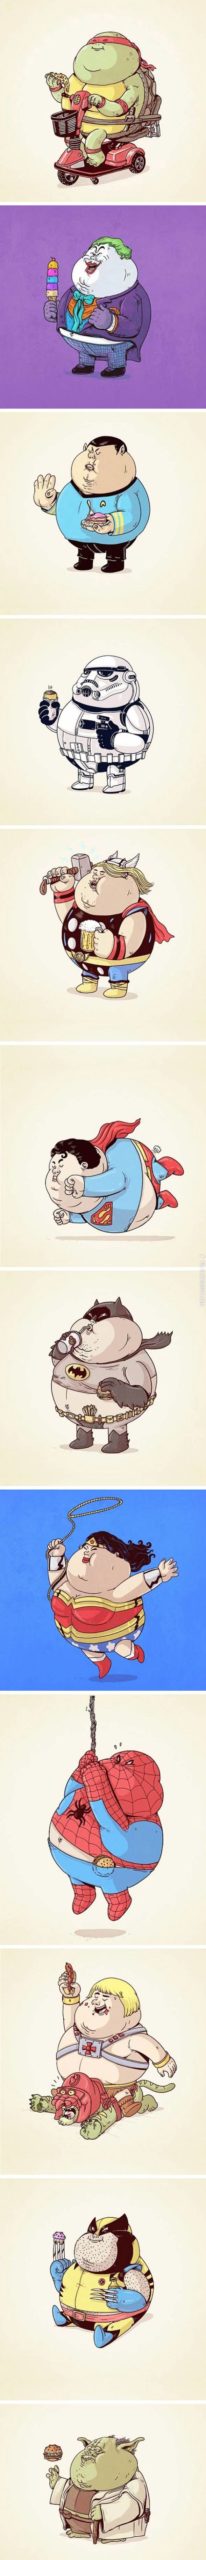 If+superheroes+were+fat.